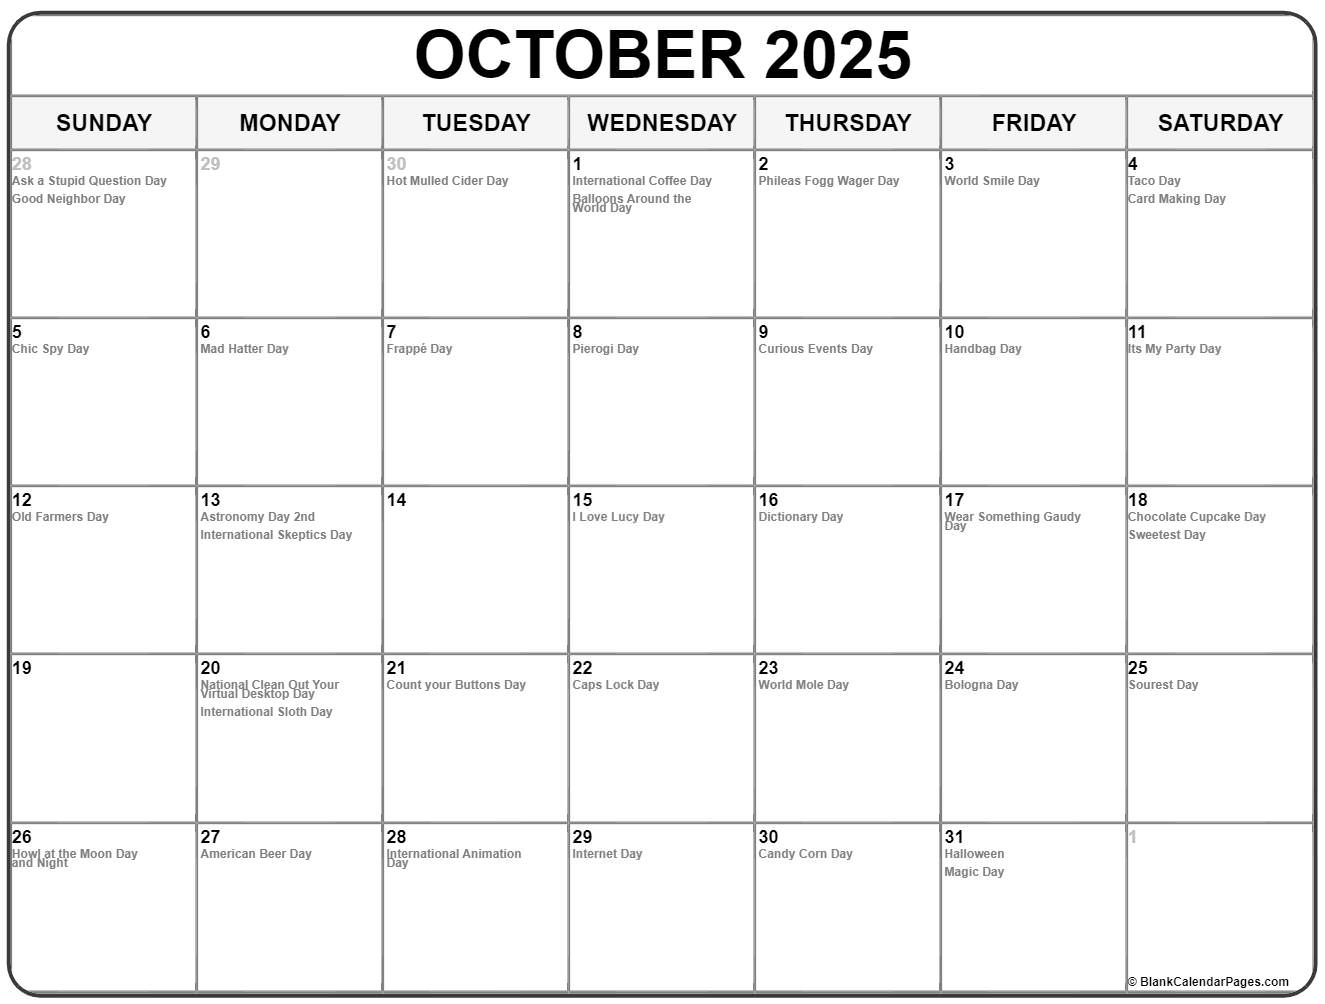 October 2025 Calendar Halloween 